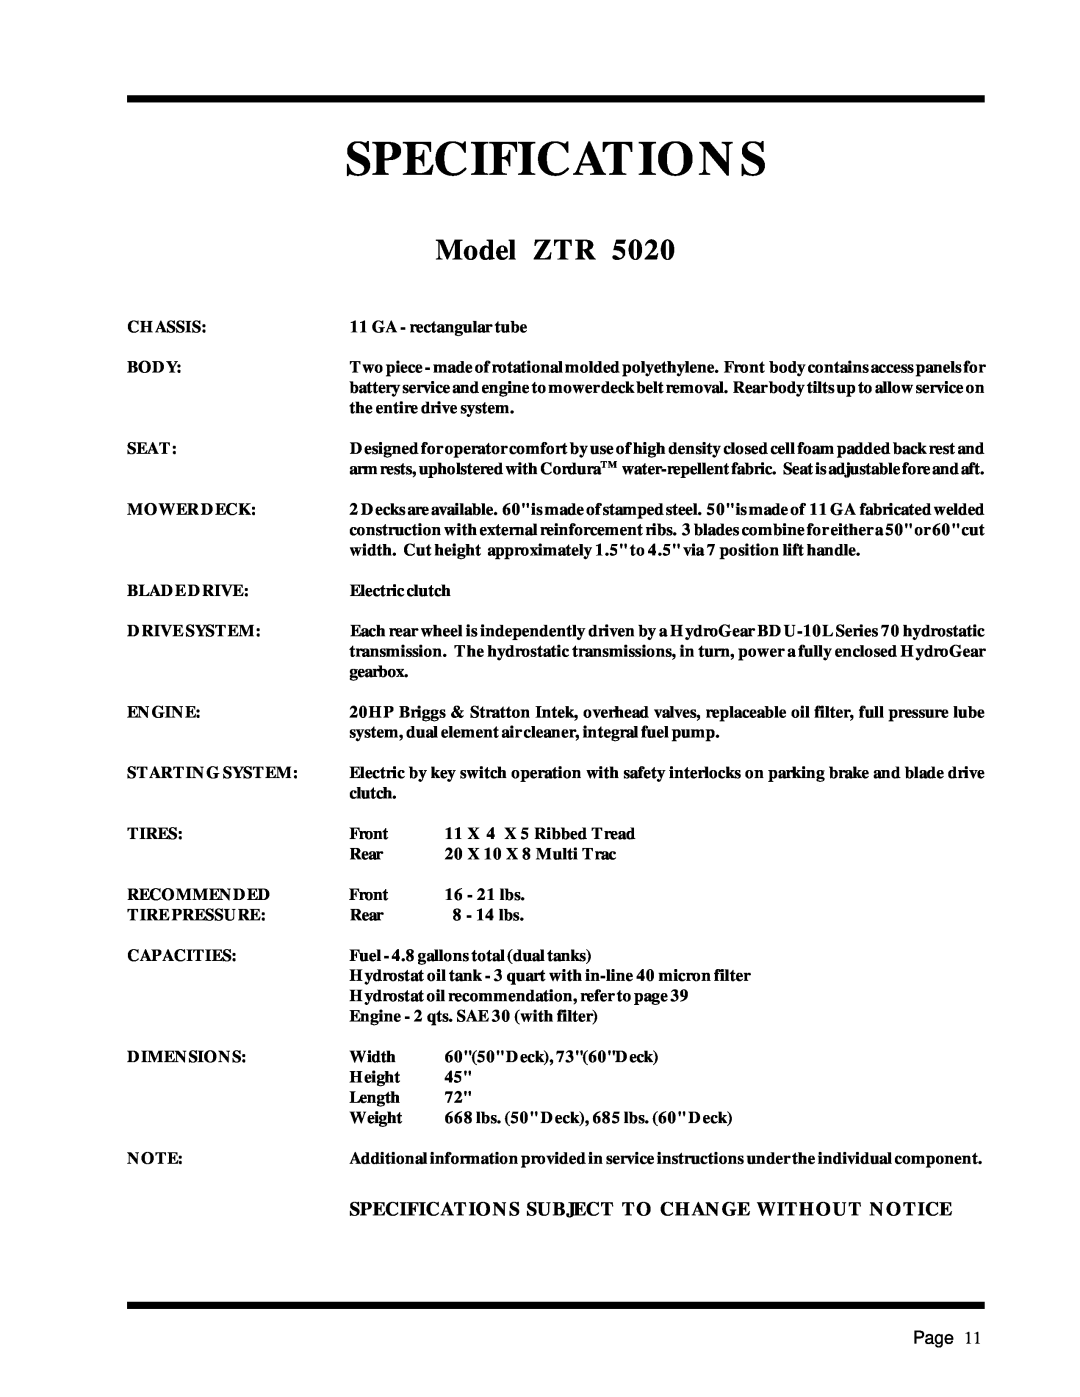 Dixon ZTR 5017Twin manual Specifications, Model ZTR 